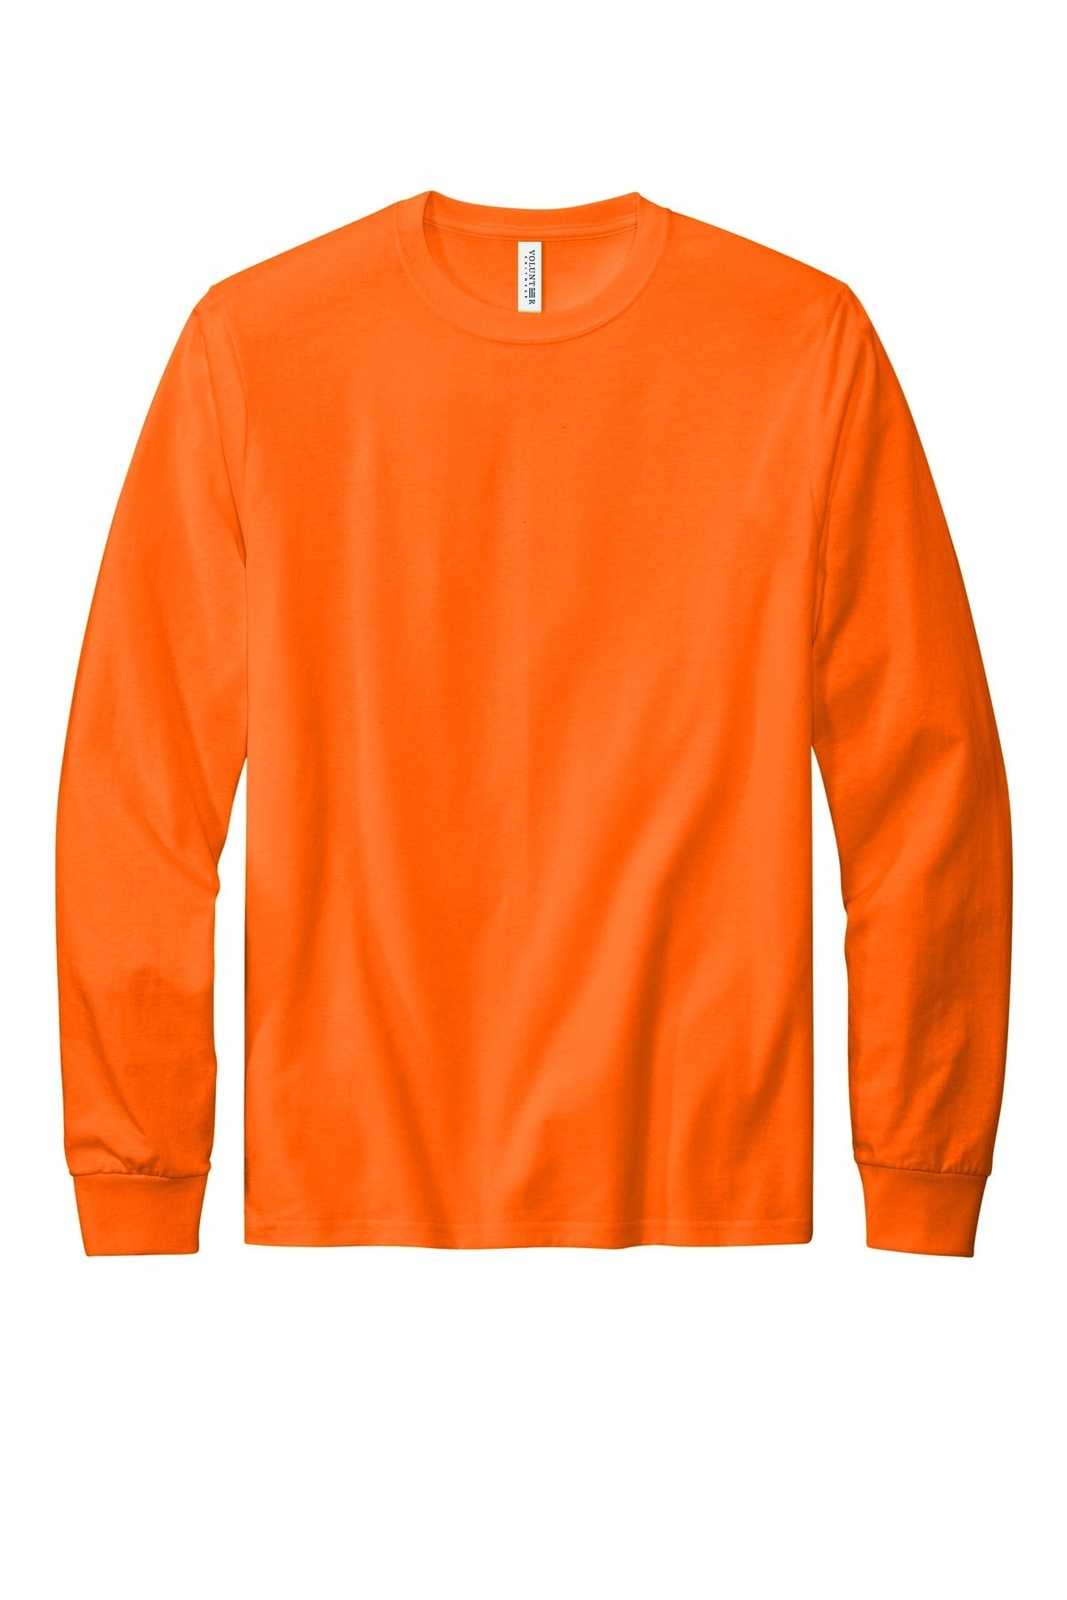 Volunteer Knitwear VL100LS All-American Long Sleeve Tee - Safety Orange - HIT a Double - 1